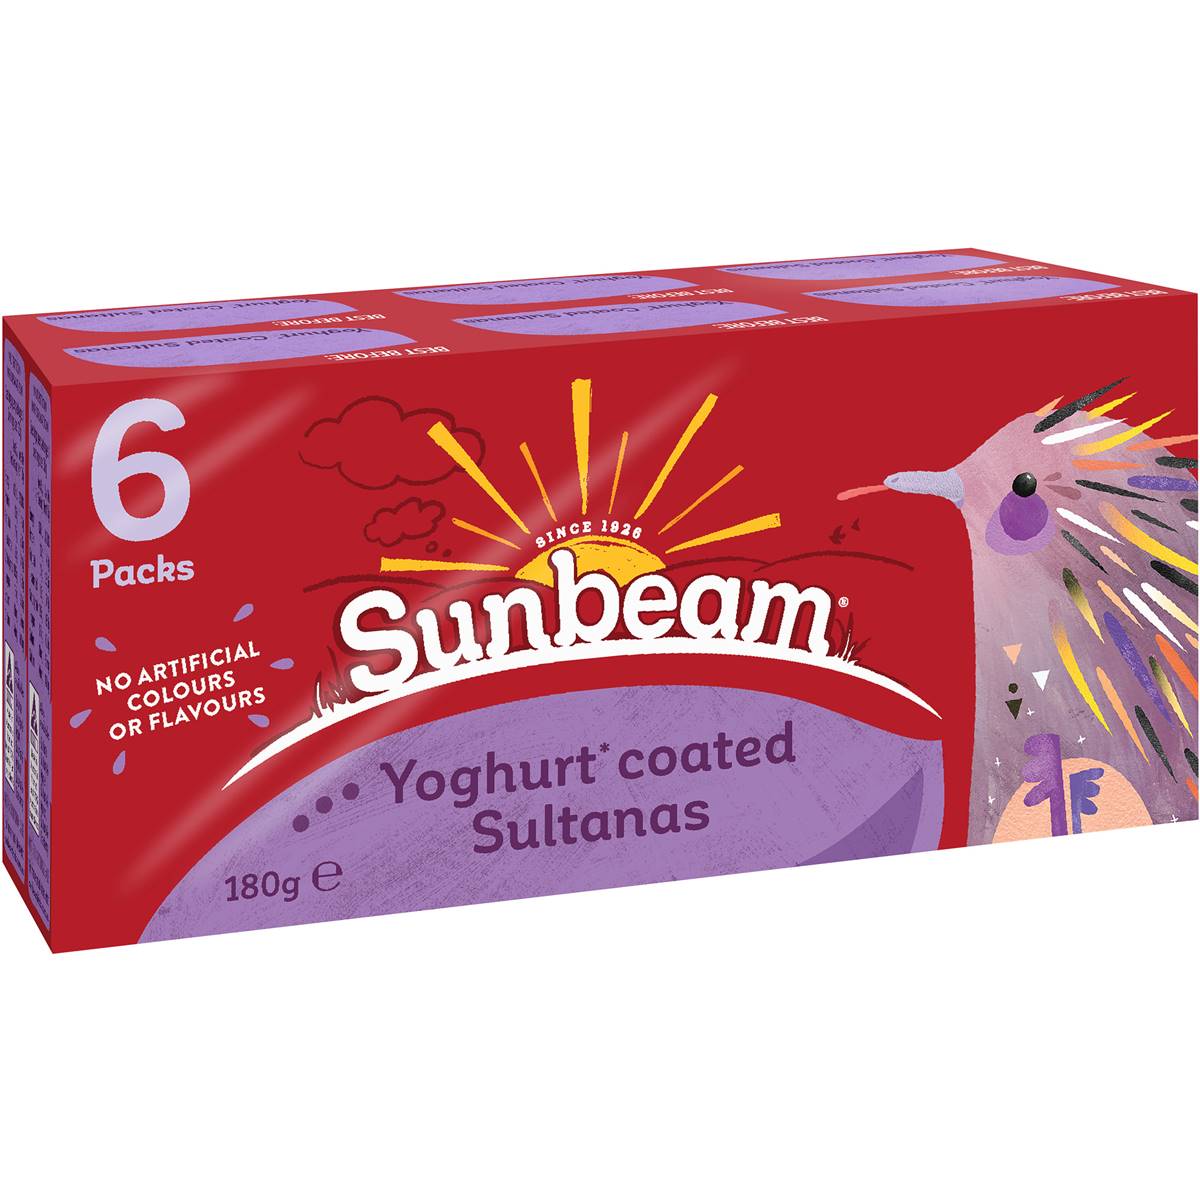 Sunbeam Snack Pack Yoghurt Sultanas 6 x 30g